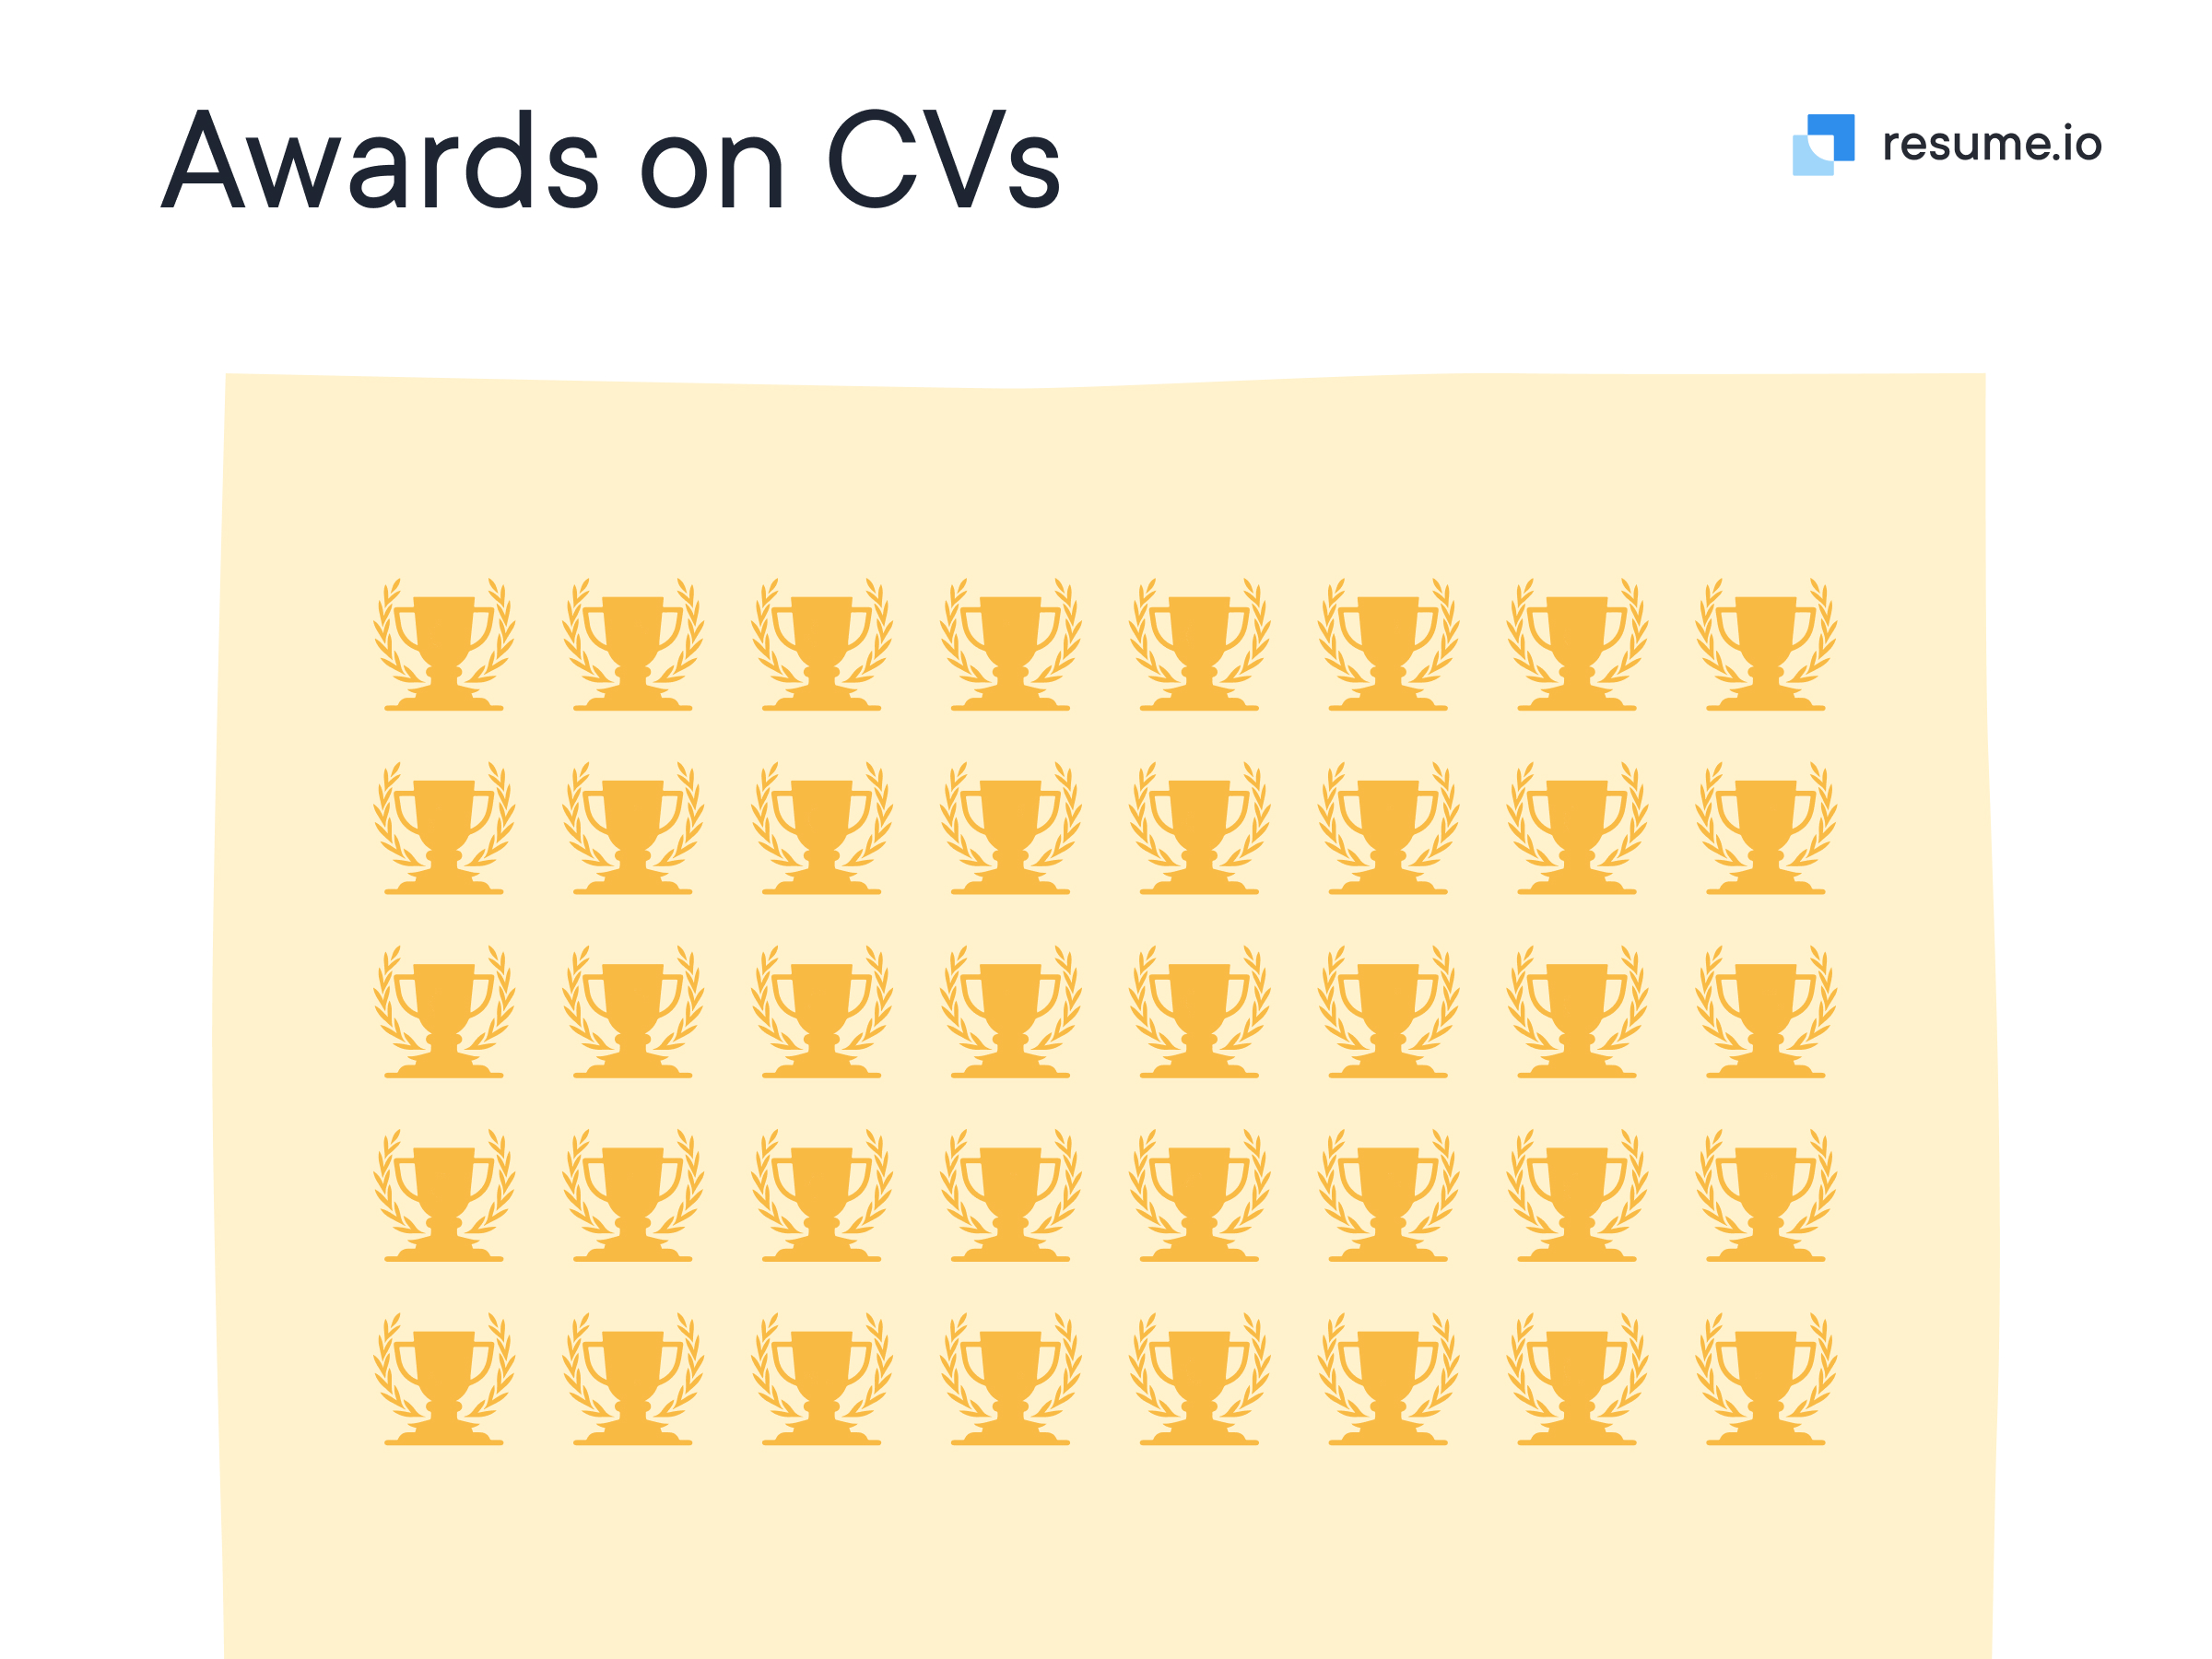 Rows of awards on CV